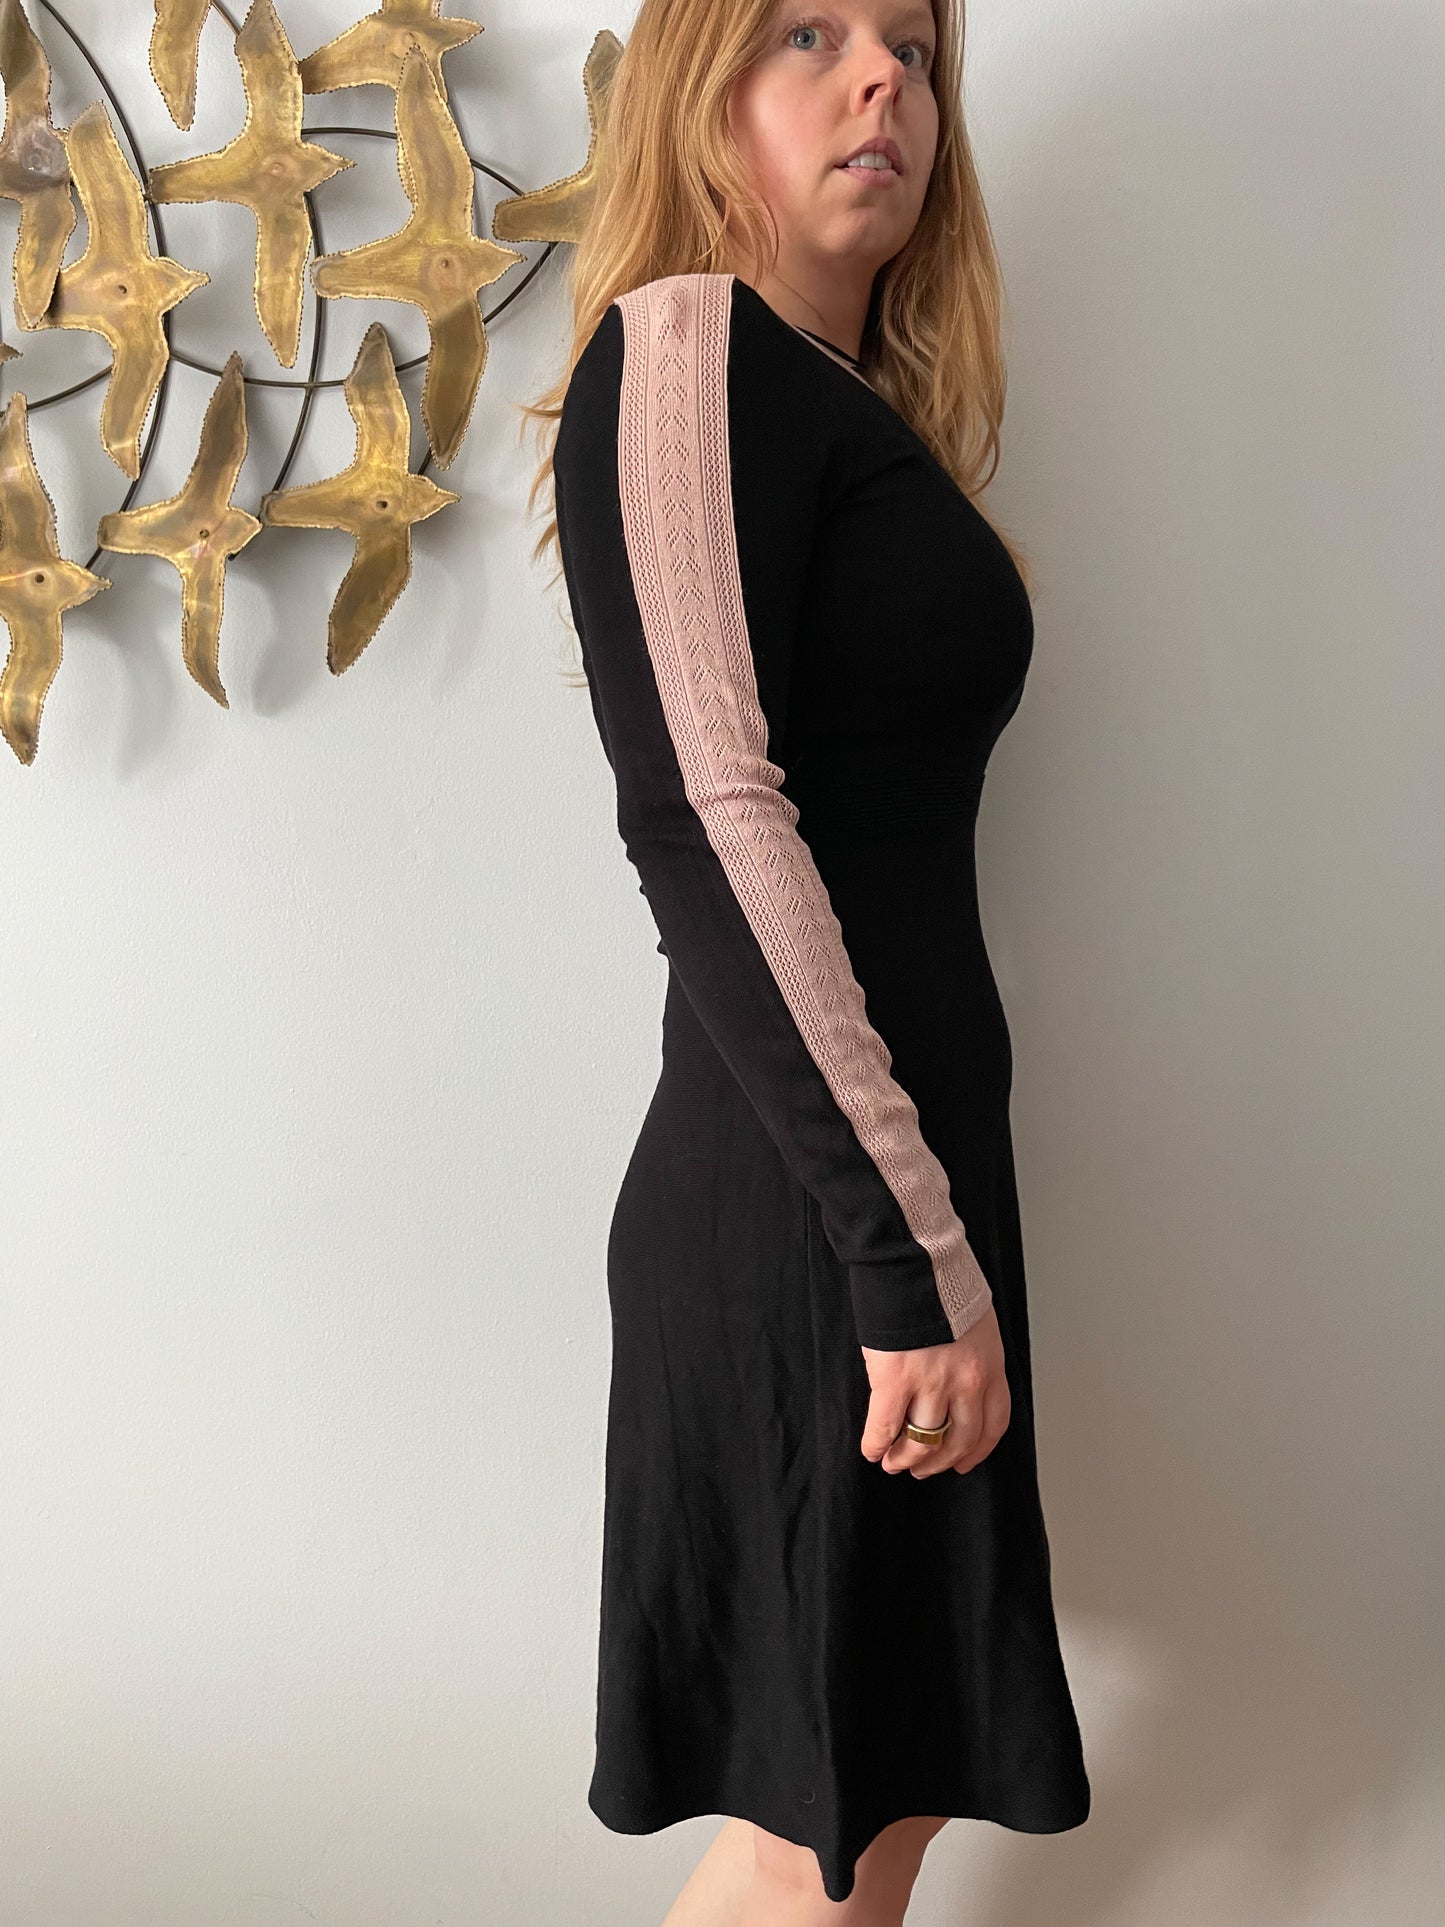 RW & Co. Black Light Pink Knit Sweater Dress - Small